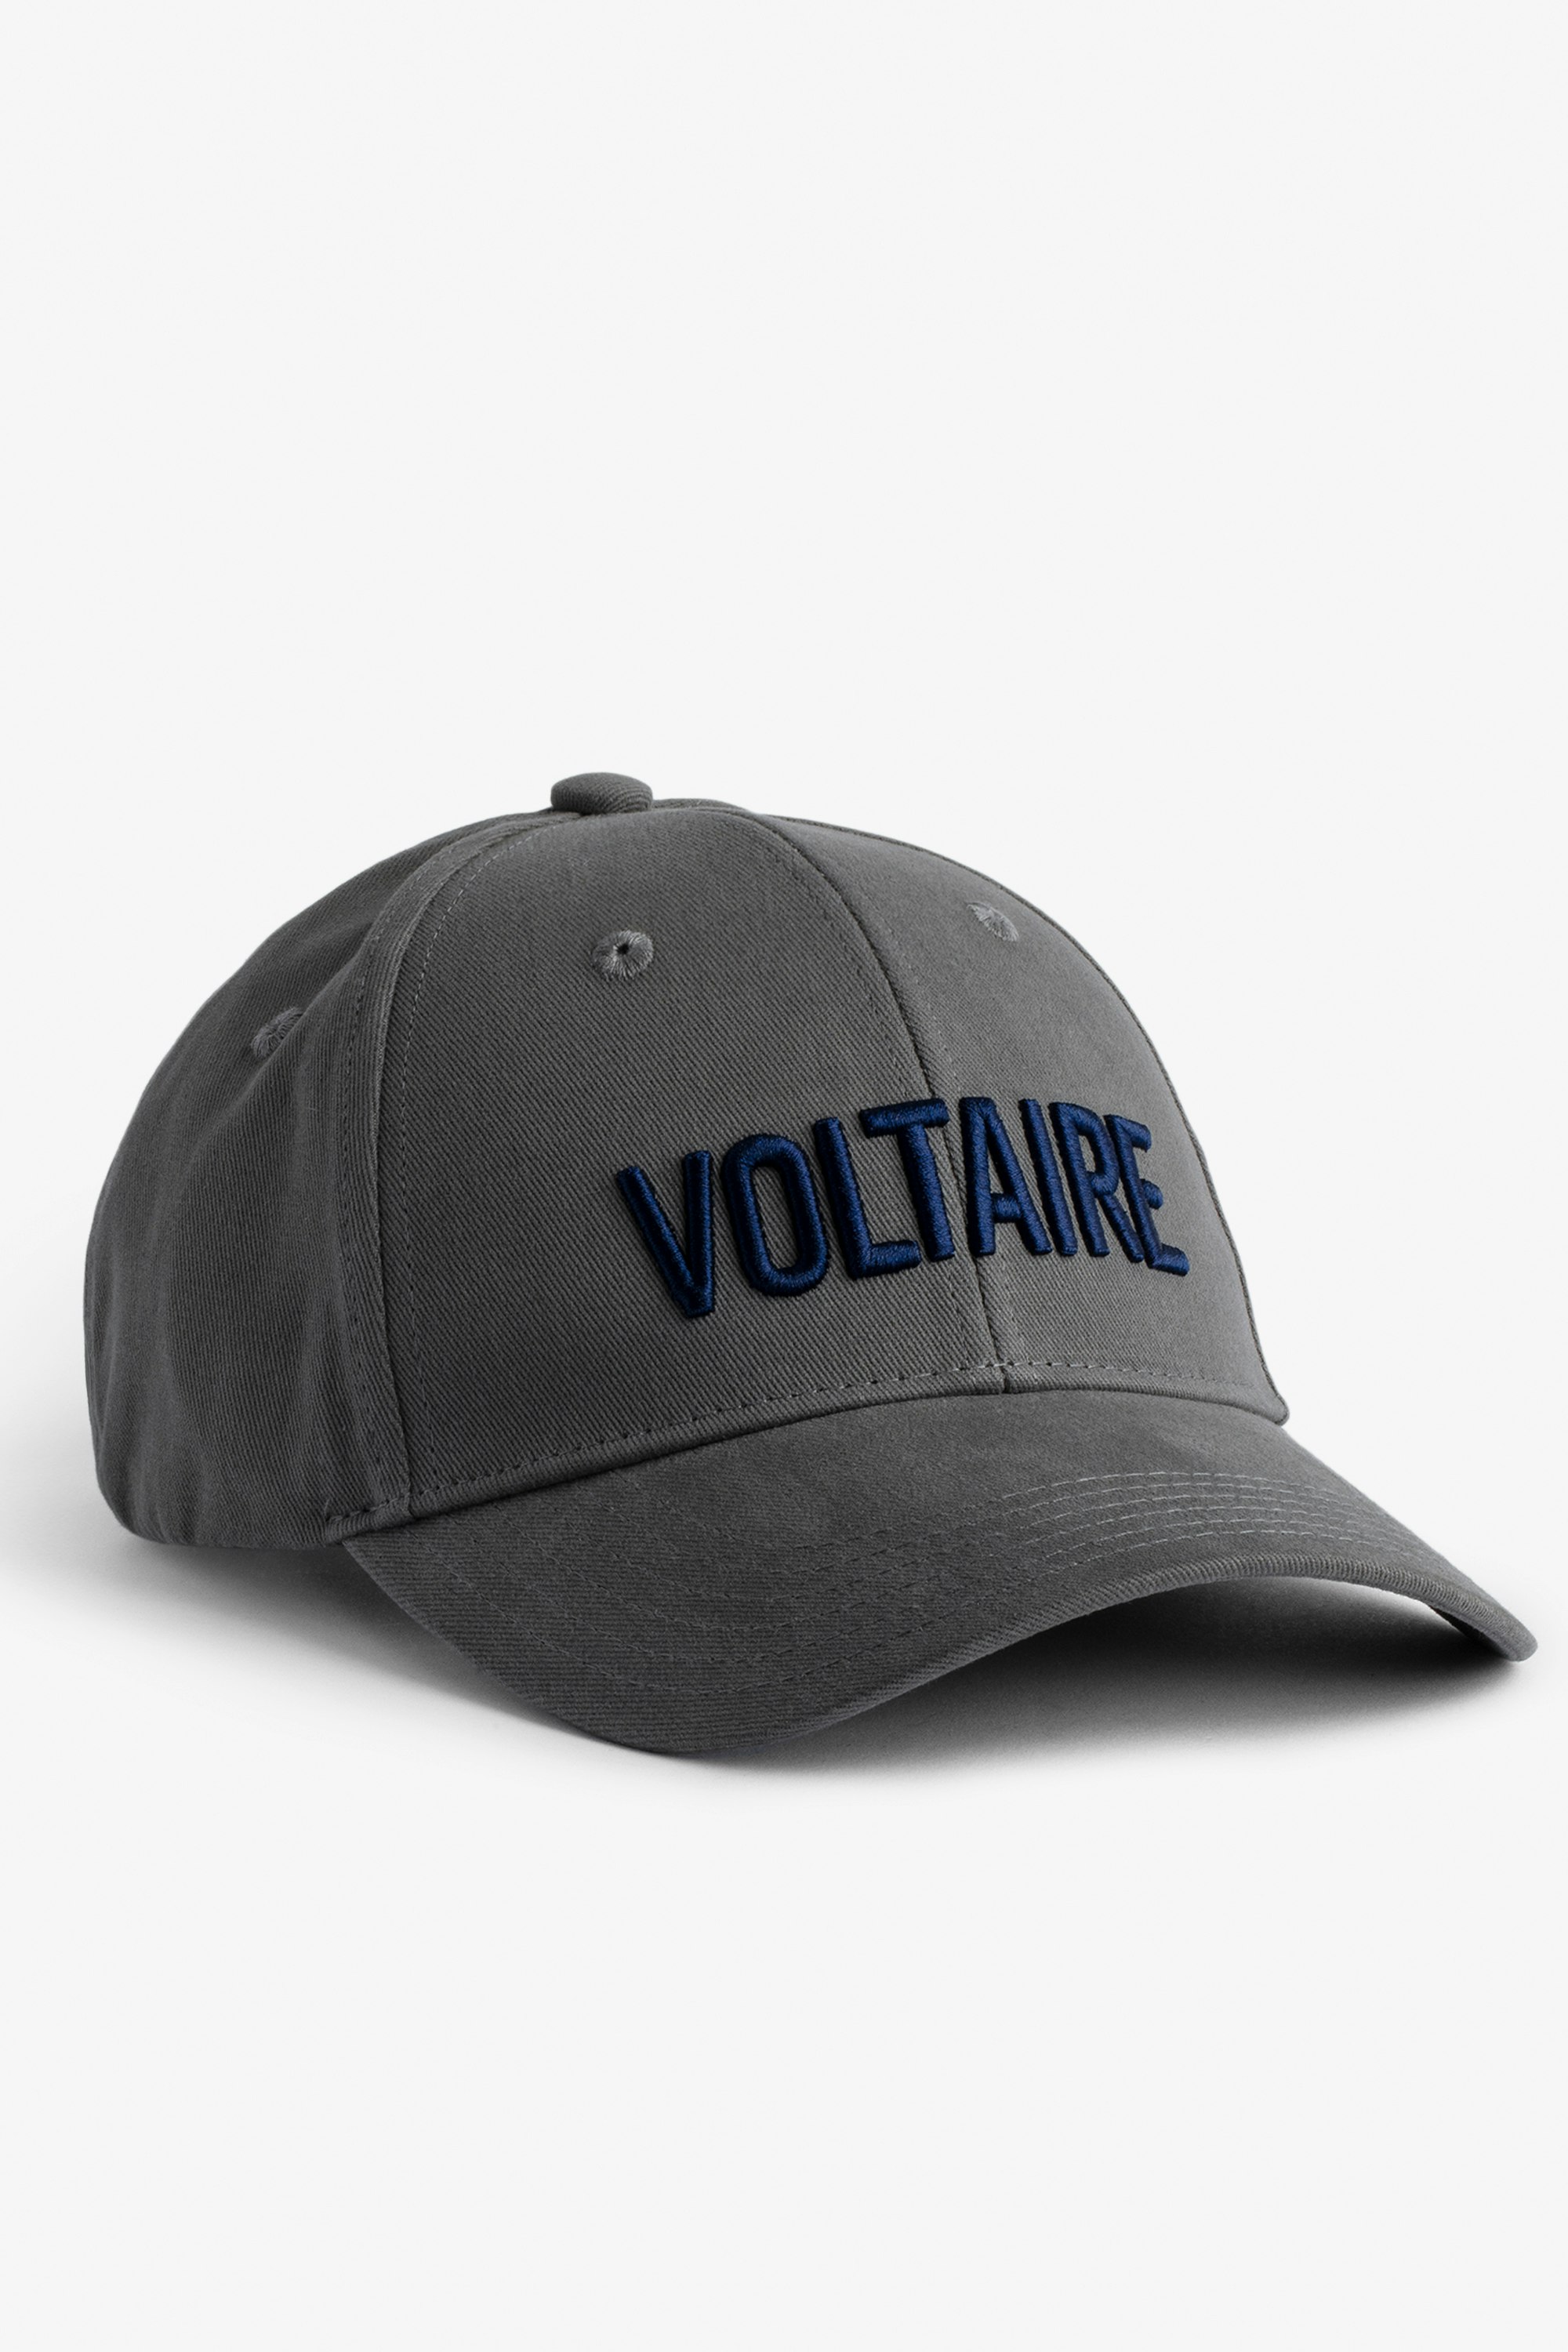 Gorra Klelia Voltaire Gorra gris de algodón para hombre con bordado «Voltaire»